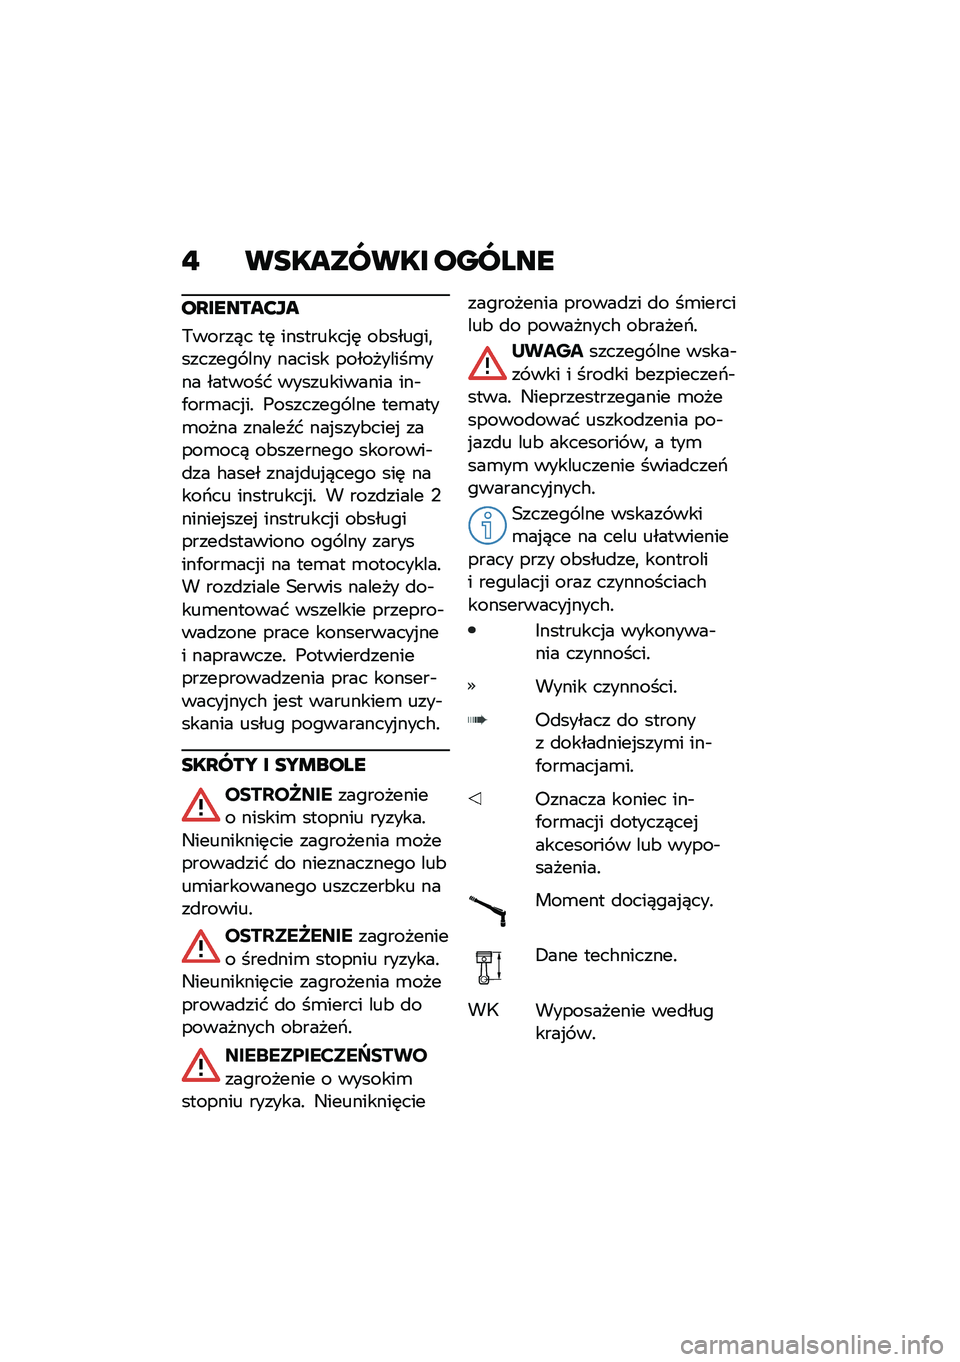 BMW MOTORRAD R 1250 RS 2021  Instrukcja obsługi (in Polish) �������������������� ������\b ������� �������!�3���������	��� ���������� �\b���������
��� �
� ������������ ���&��\